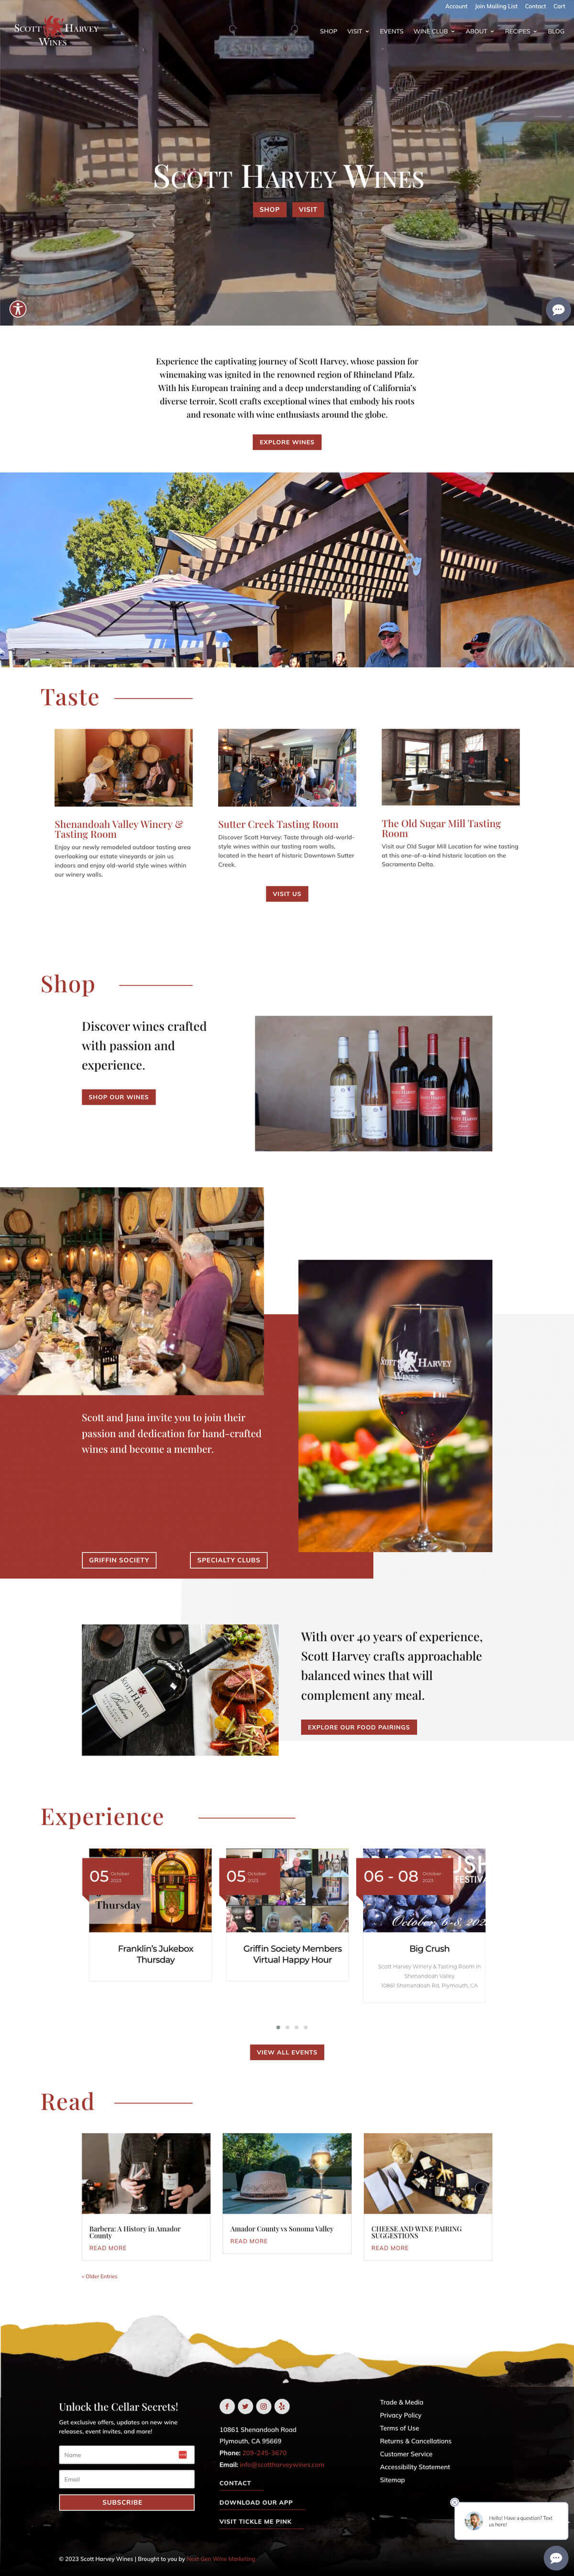 scott harvey wines homepage image